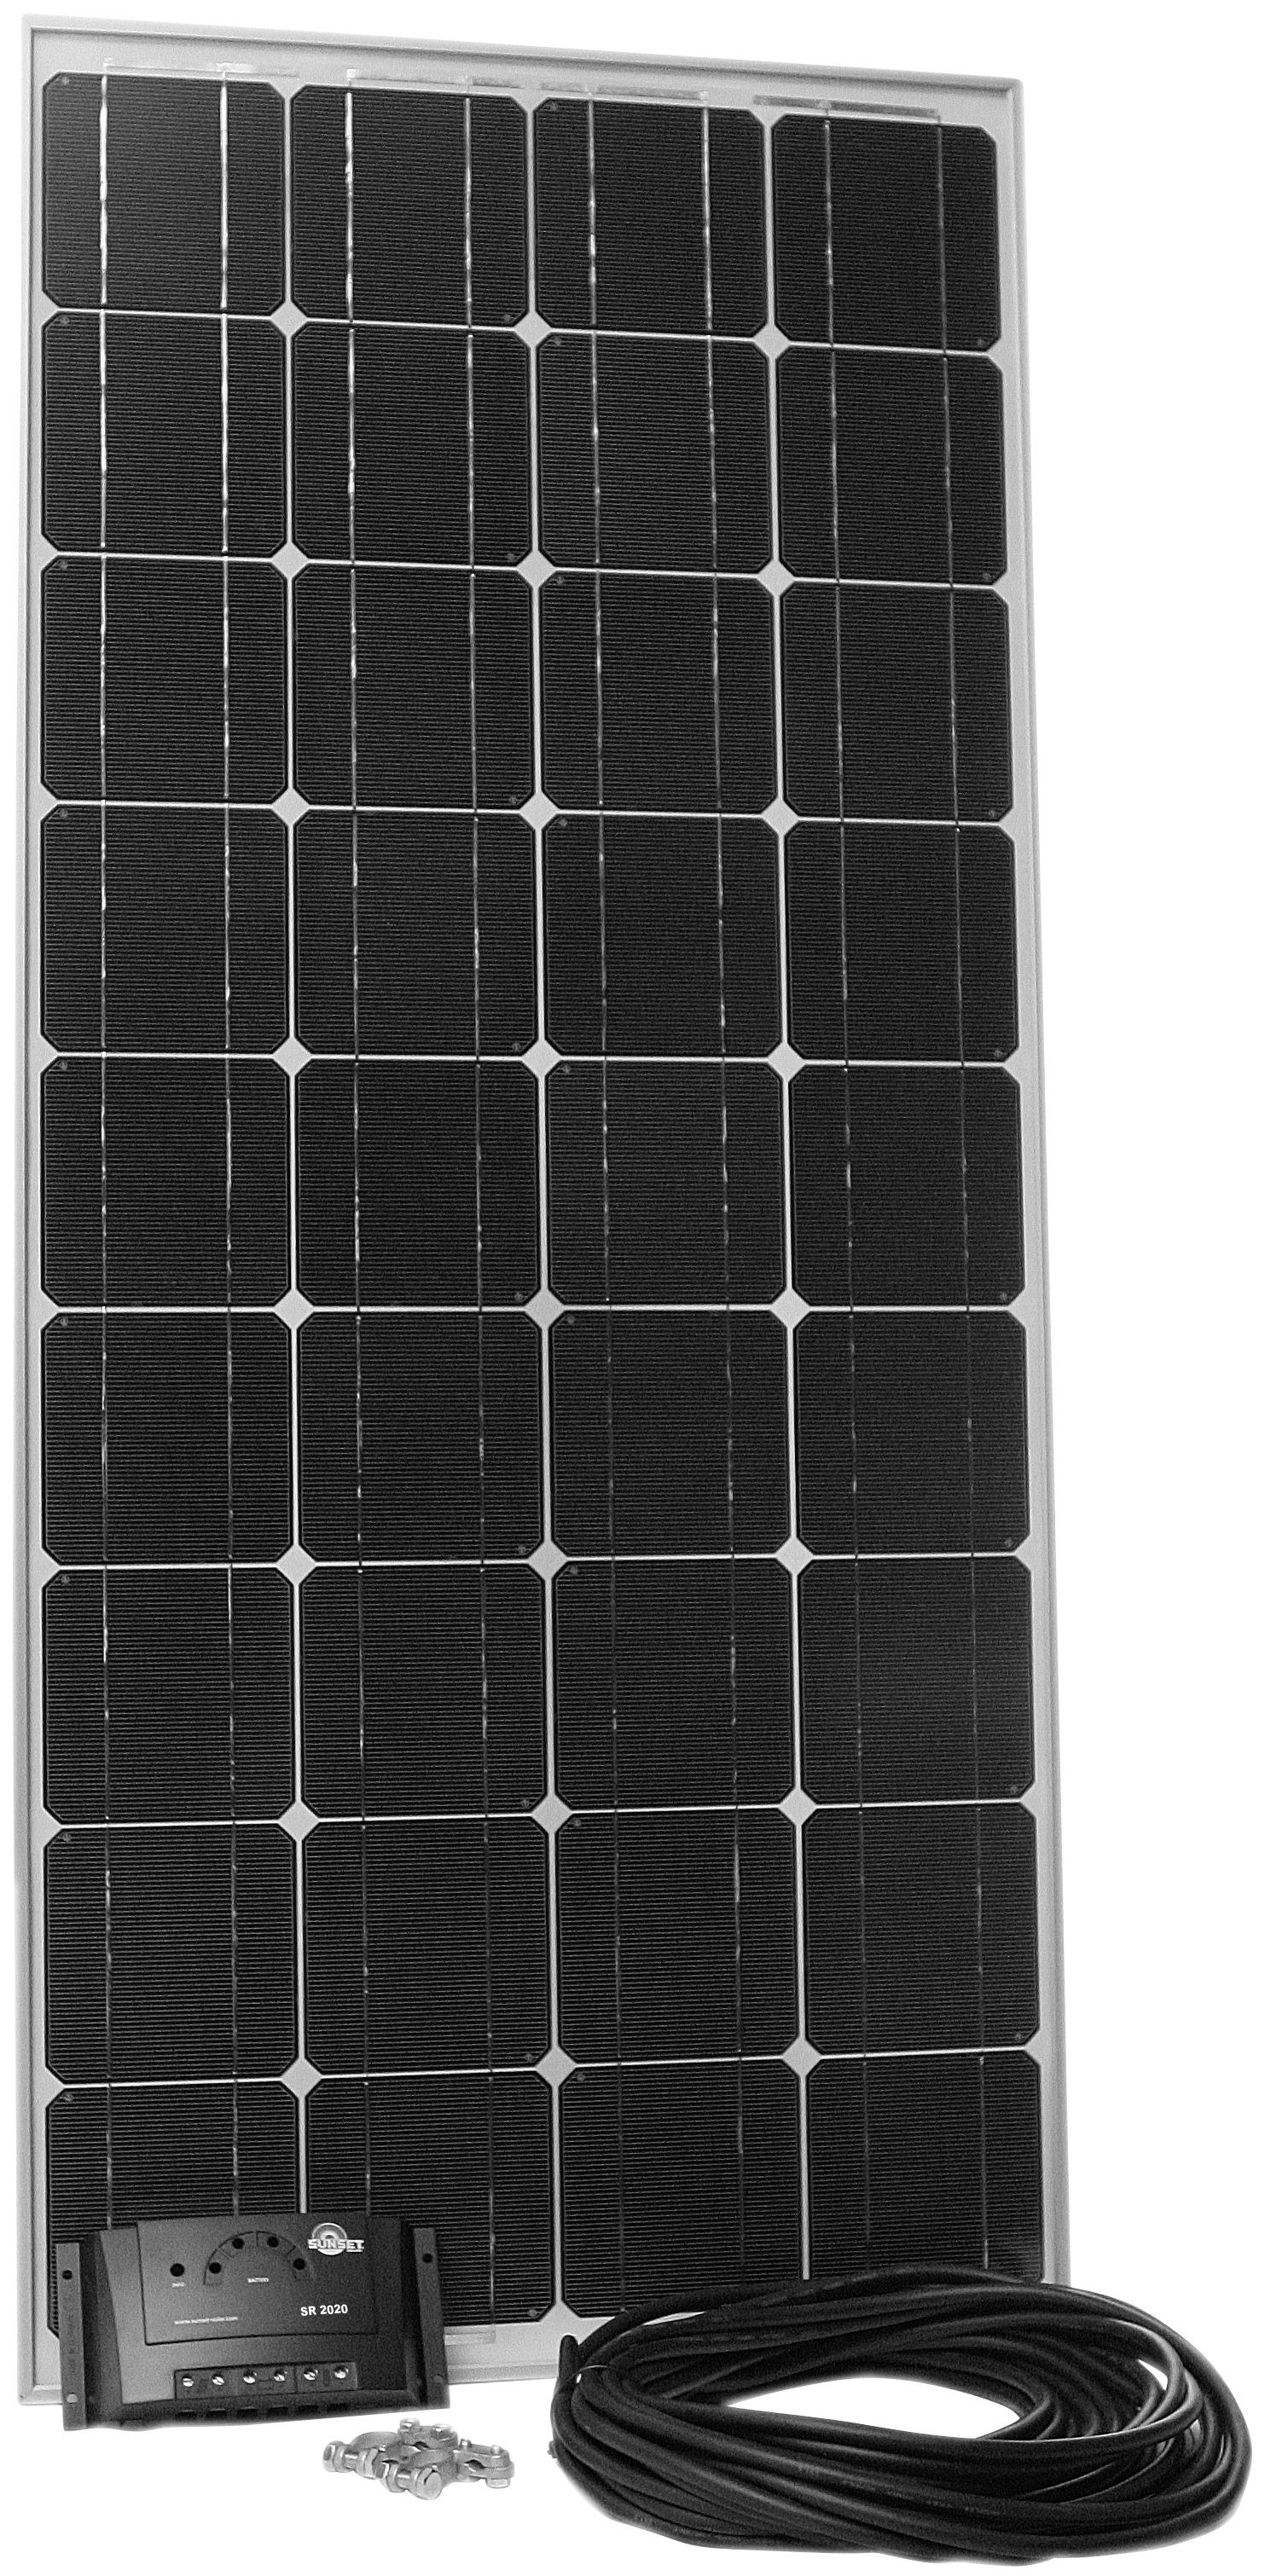 Sunset Solarmodul Stromset AS 180, 180 Watt, 12 V, 180 W, Monokristallin, (Set), für Gartenhäuser oder Reisemobil